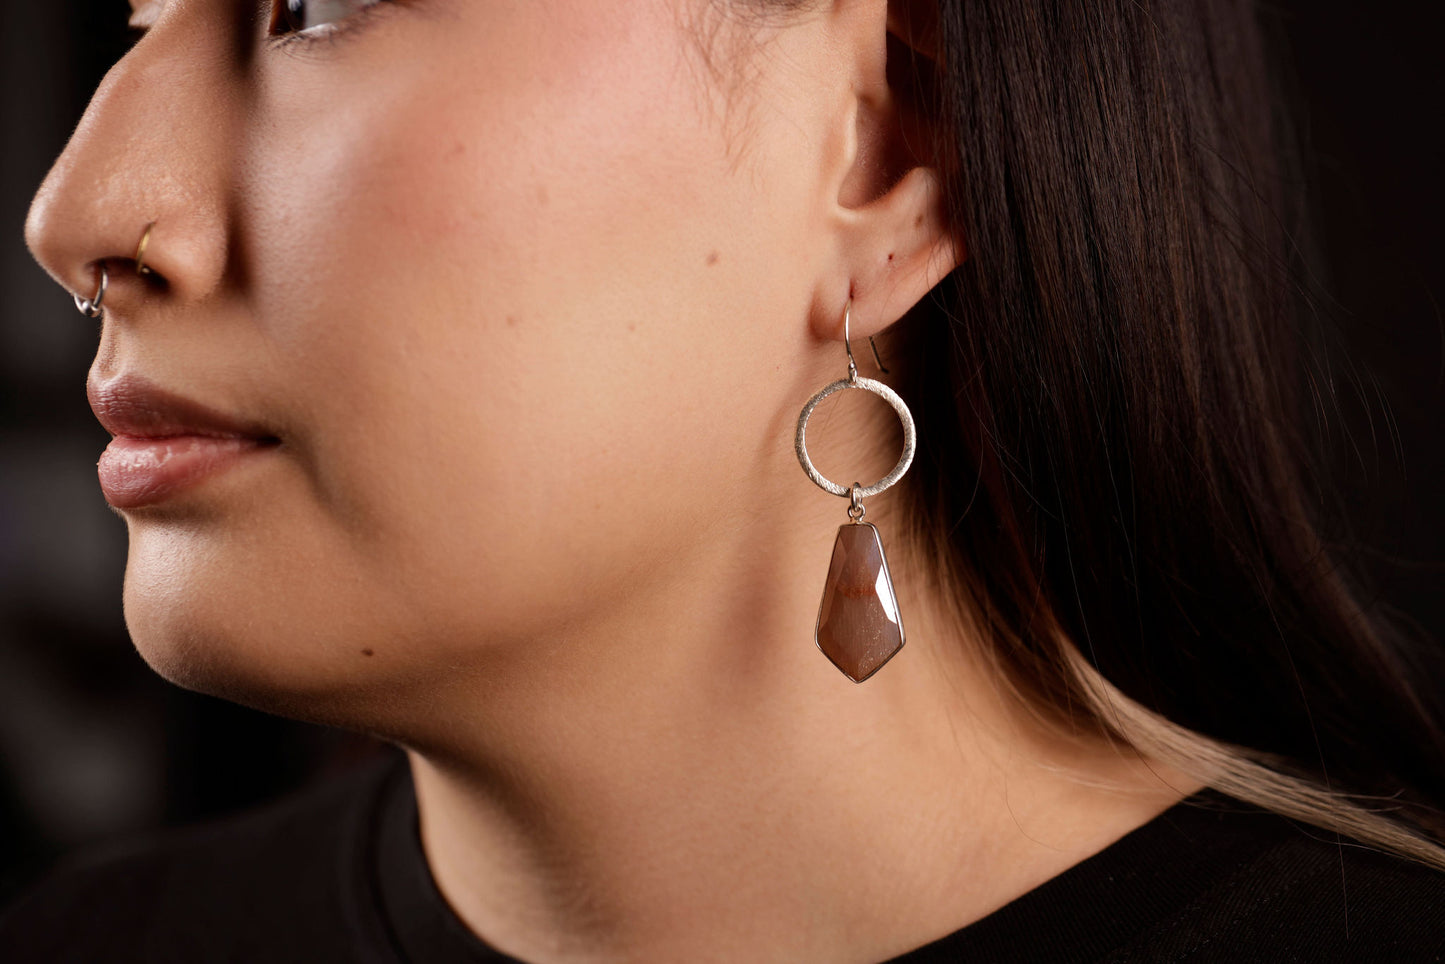 moonstone dangle earrings on model